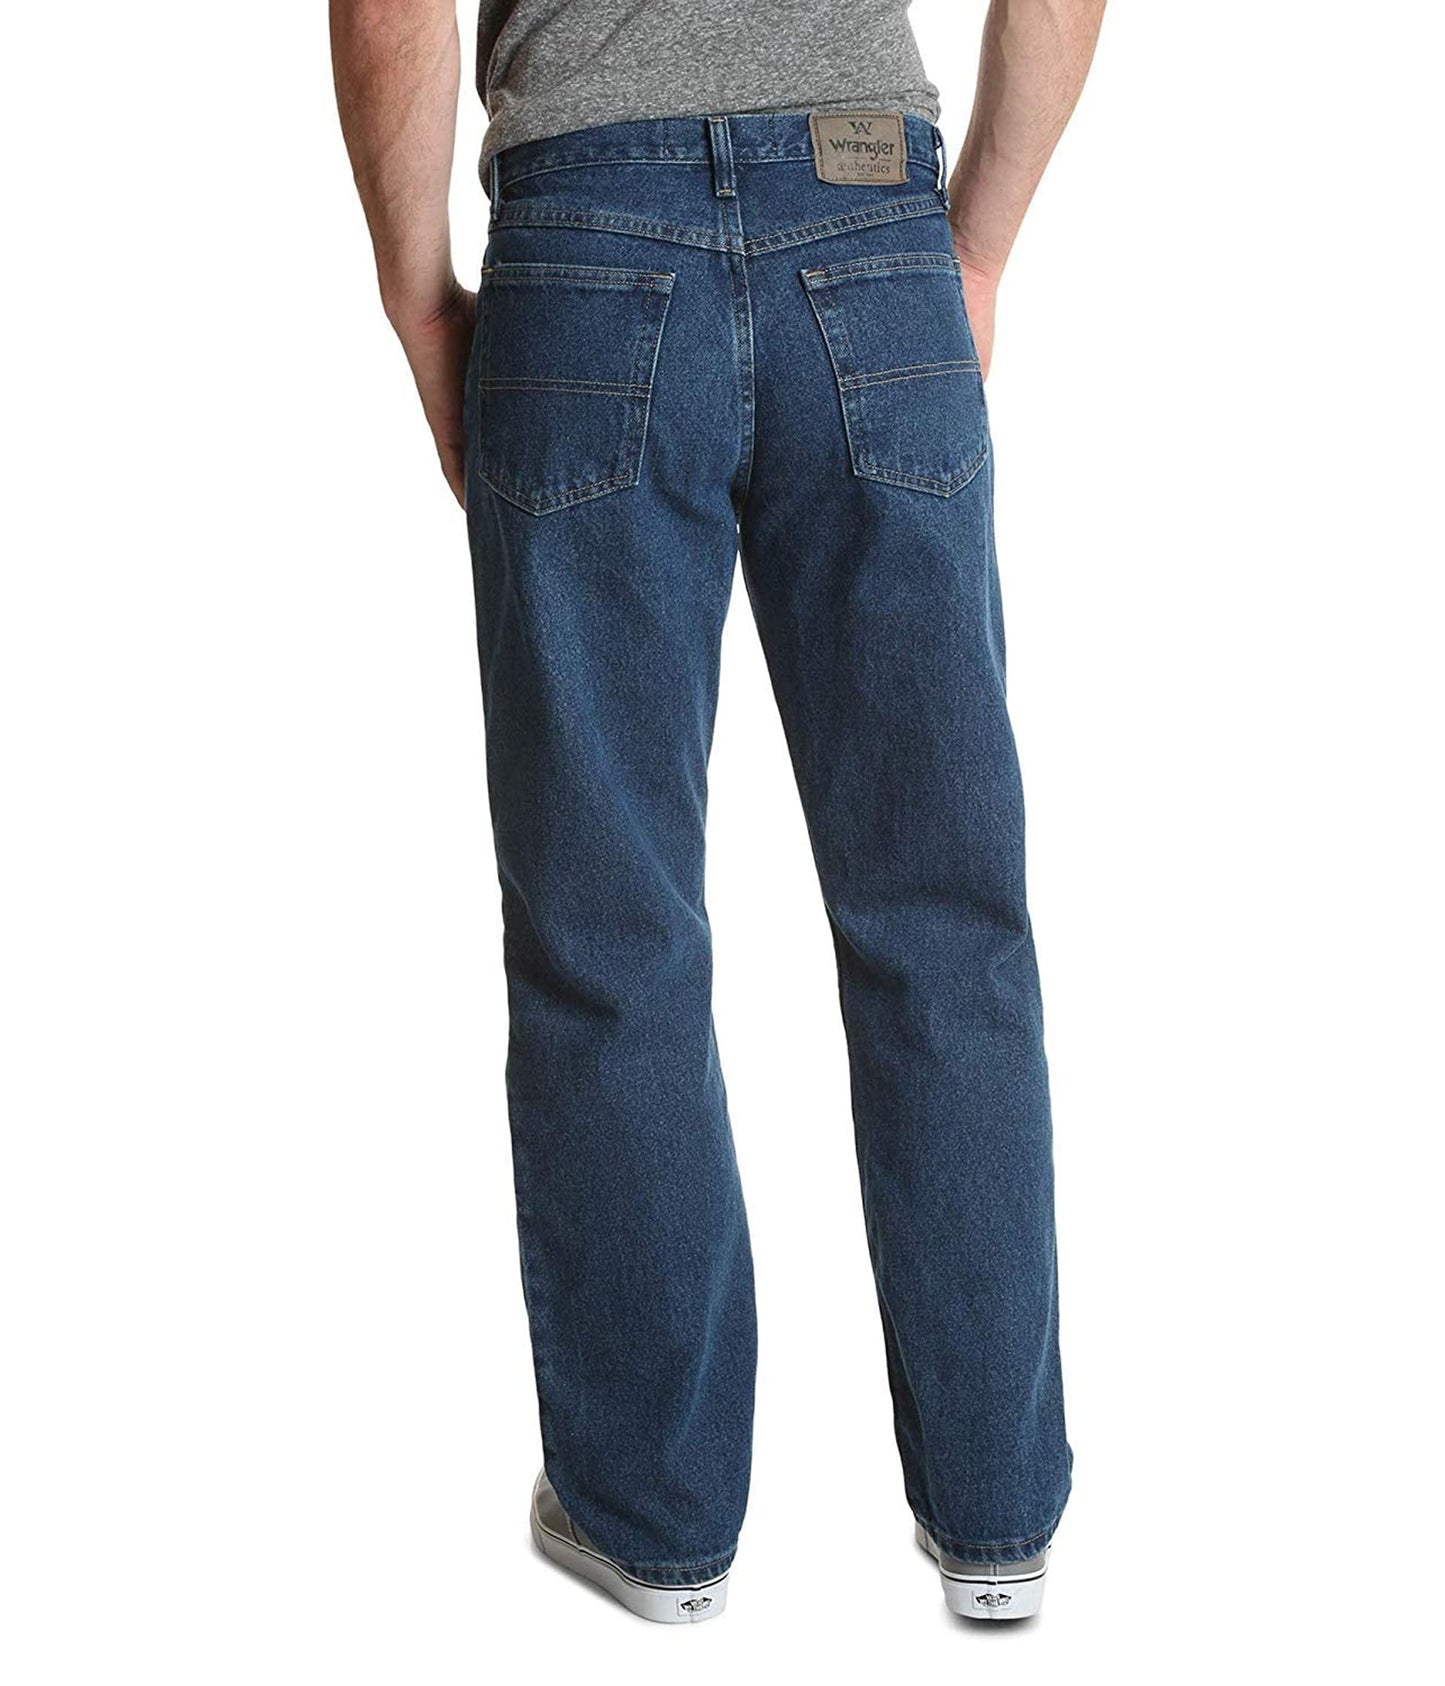 Wrangler Authentics Men's Classic 5-Pocket Relaxed Fit Cotton Jean, Dark Stonewash, 35W x 32L